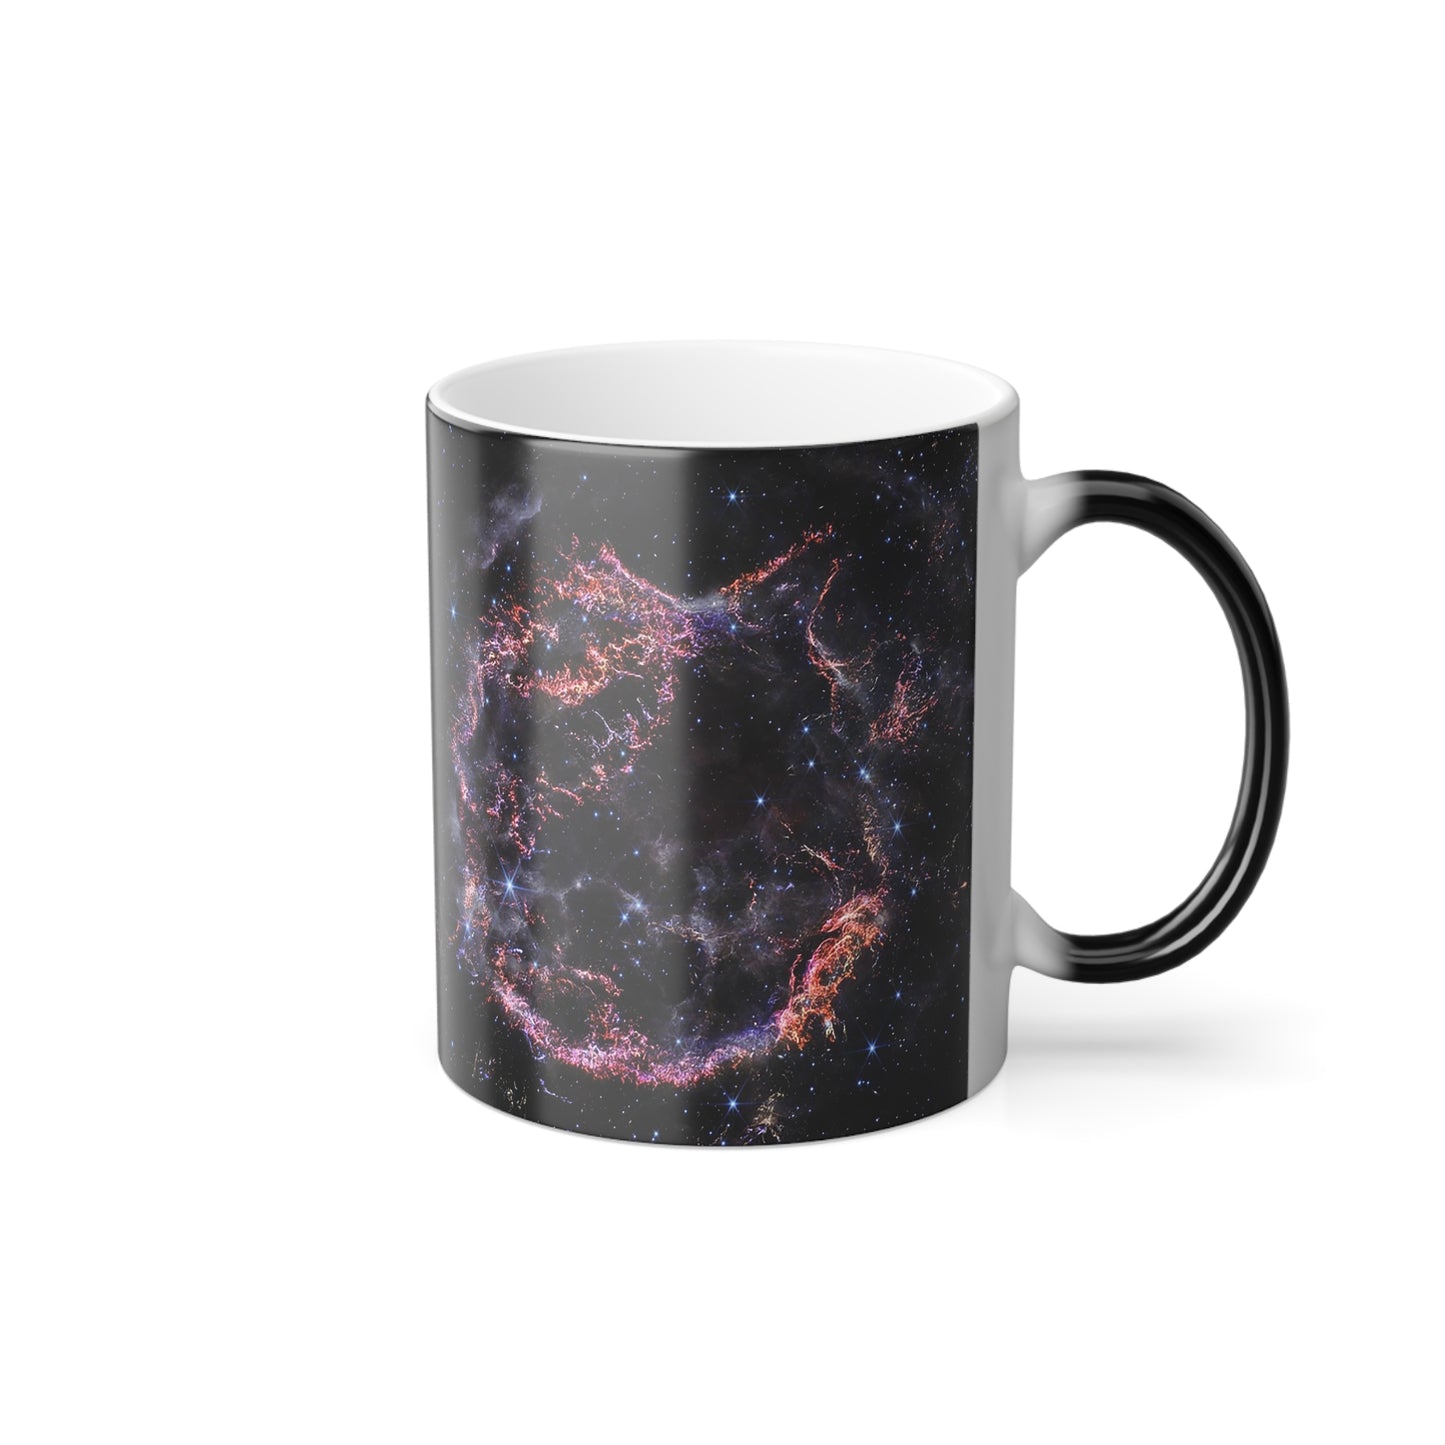 Magical Mug: Cosmos 2 Reveals the Universe with Heat, 11oz